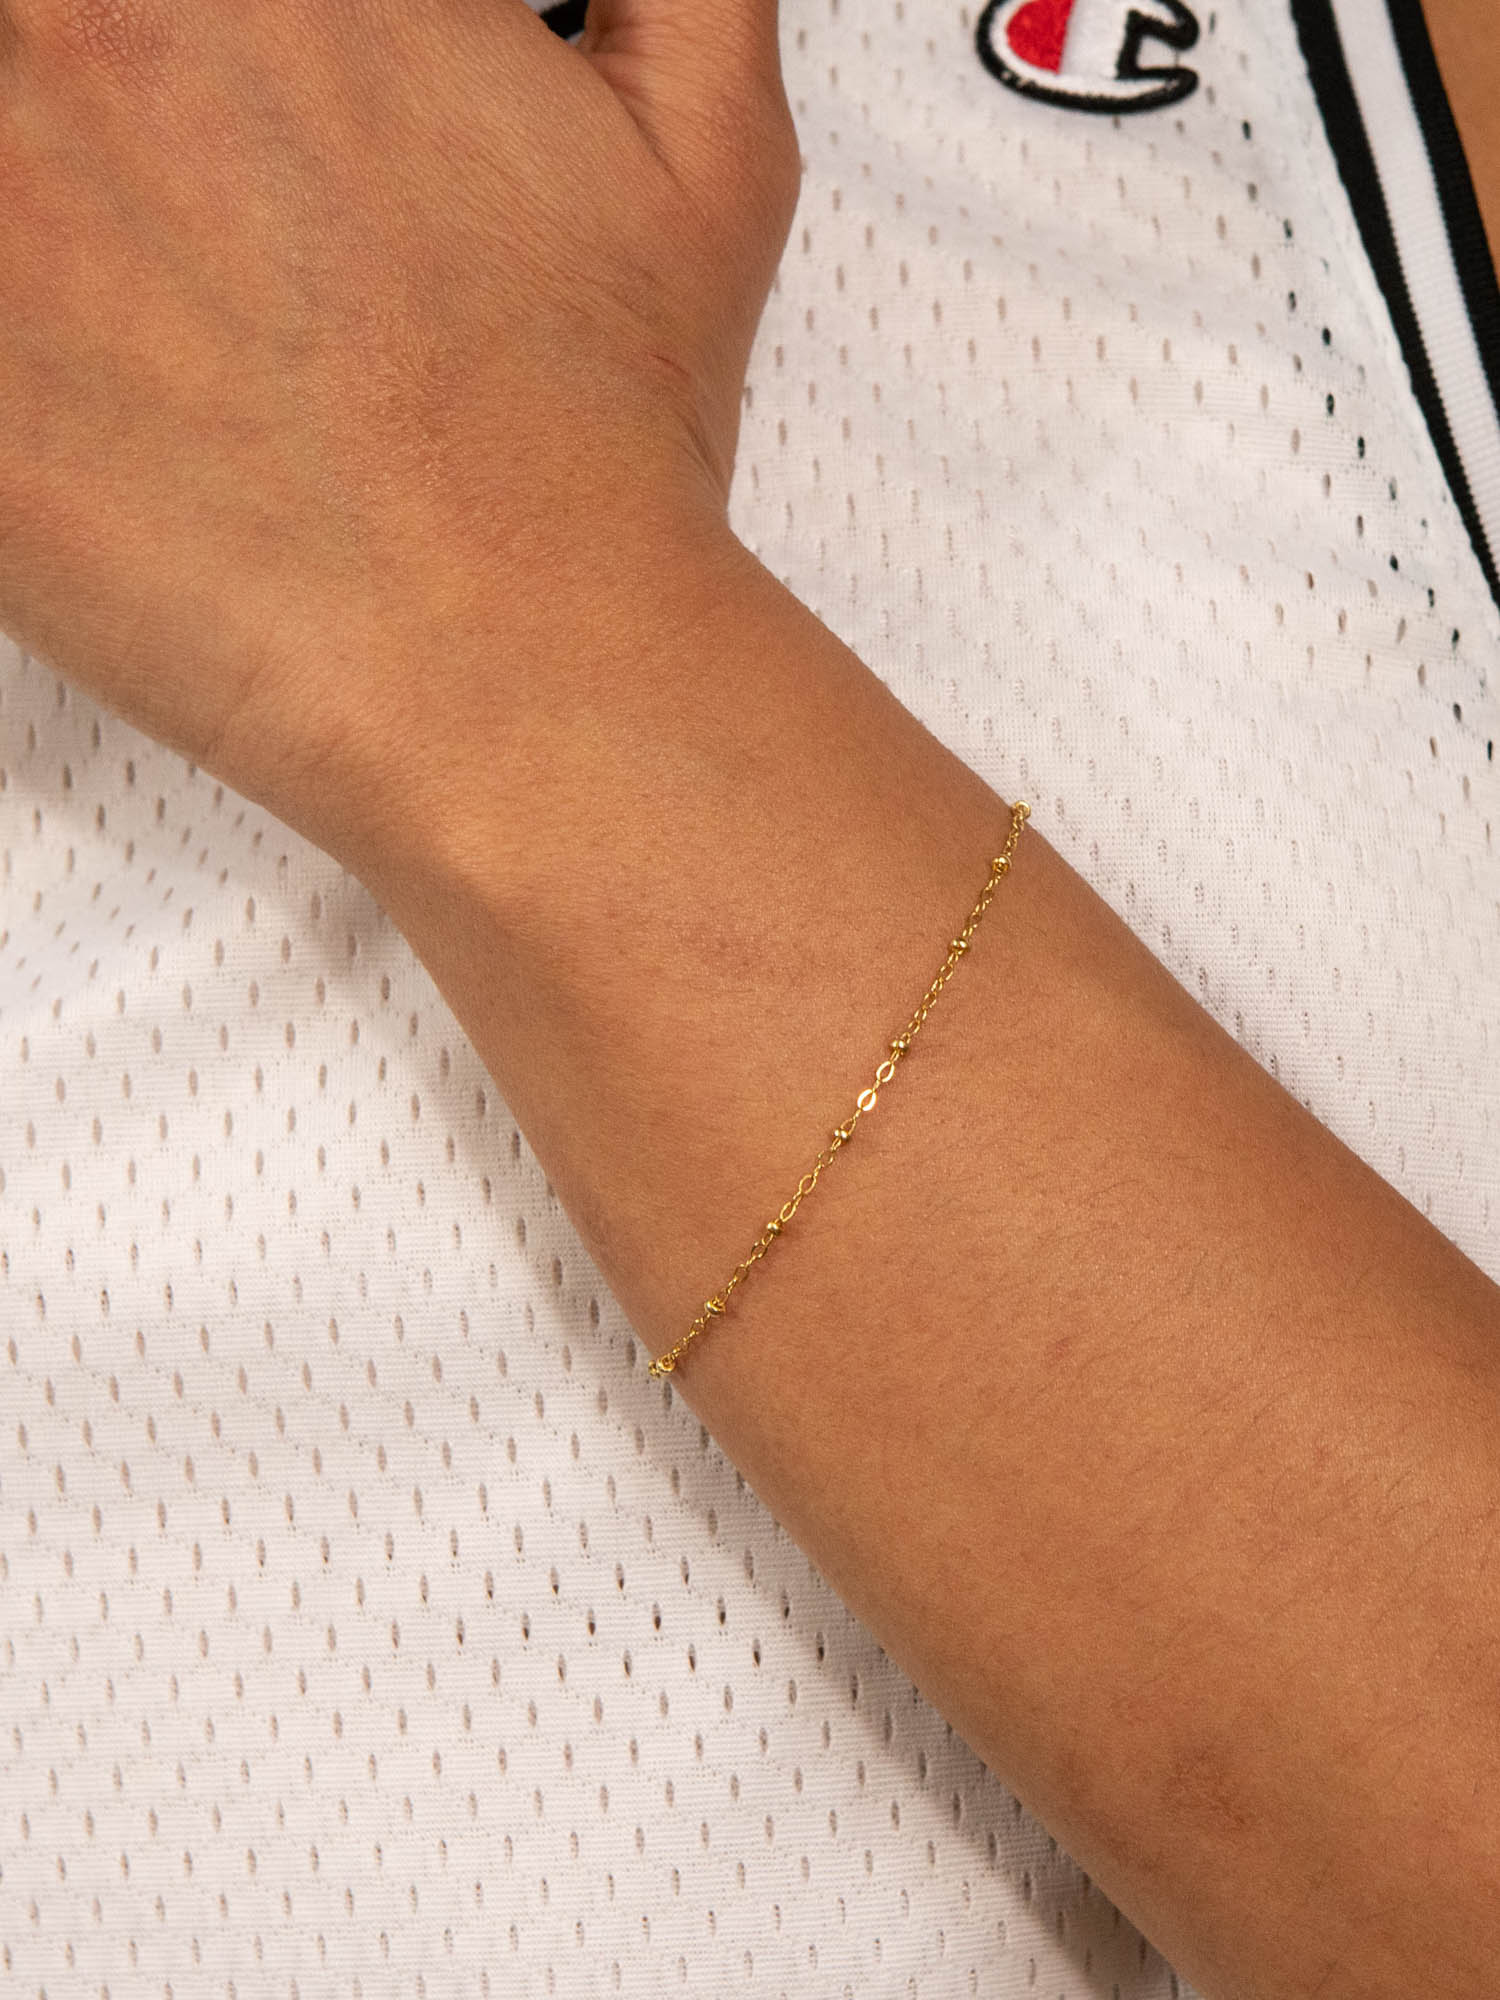 Shop OXB Necklaces Gold Filled / 6" Satellite Chain Bracelet